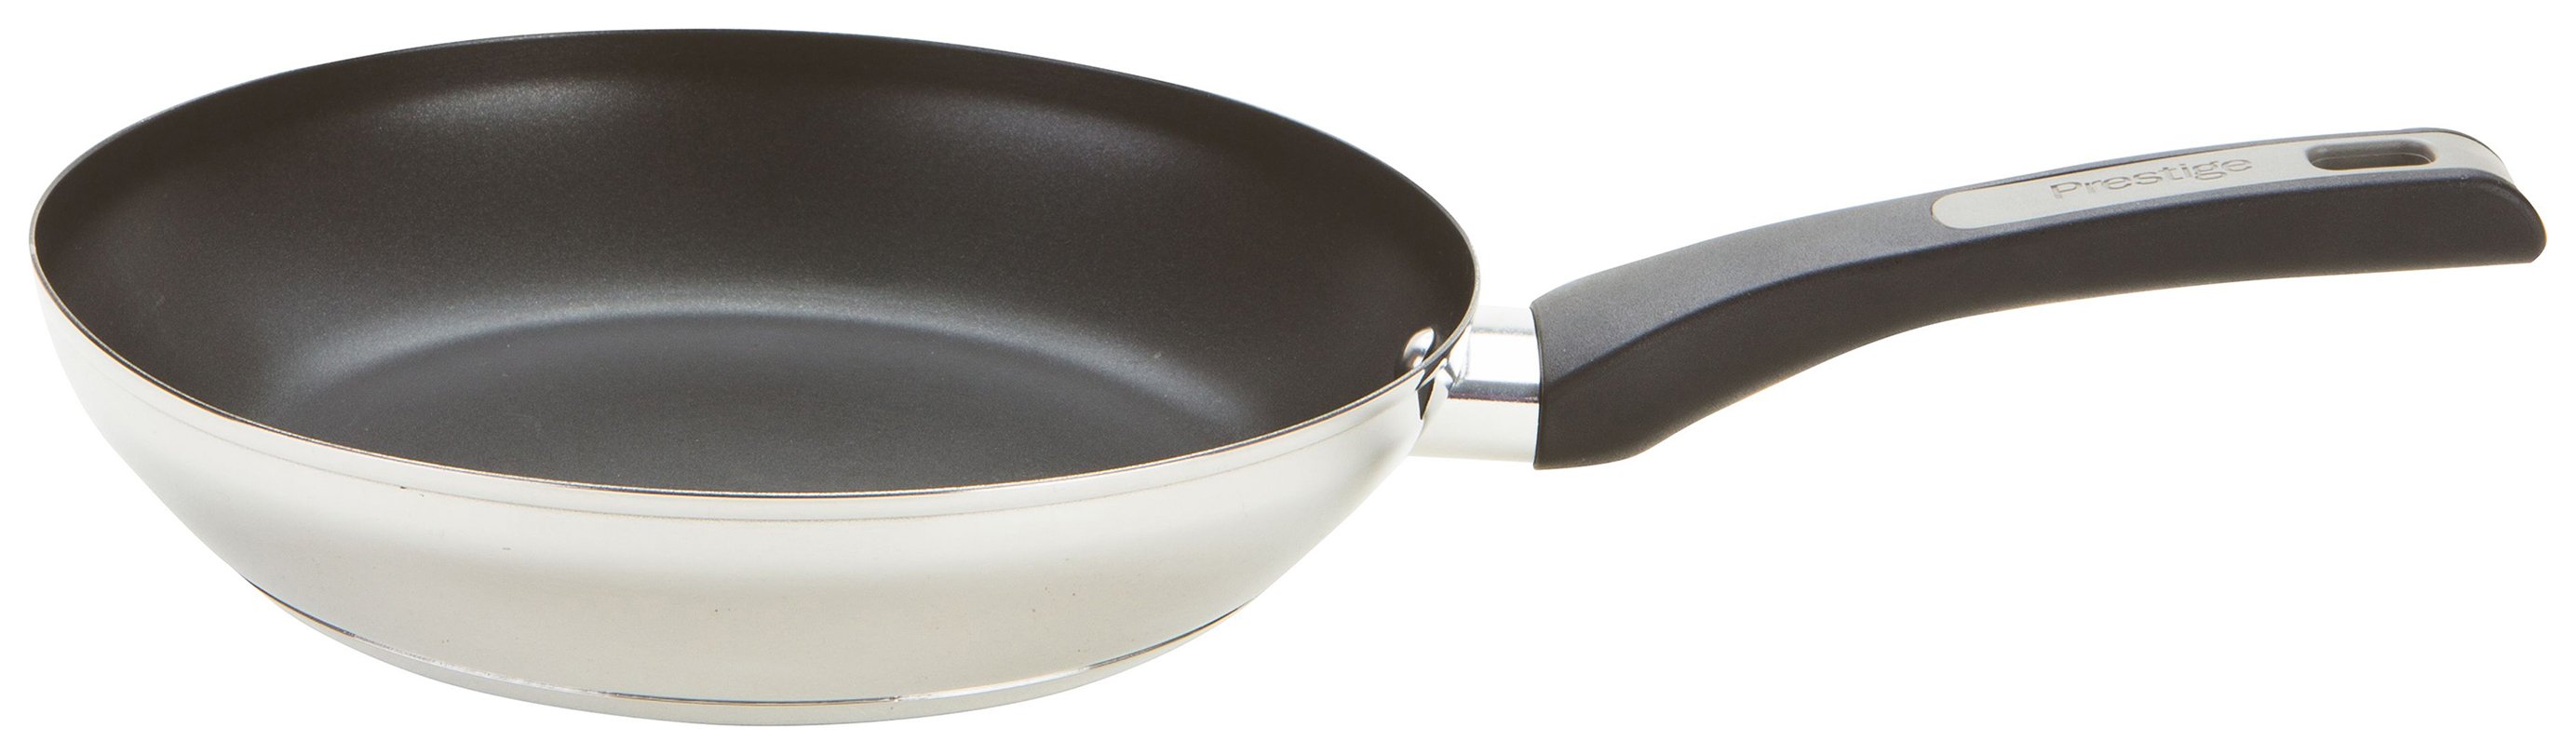 Prestige DuraSteel 20cm Non-Stick Frying Pan